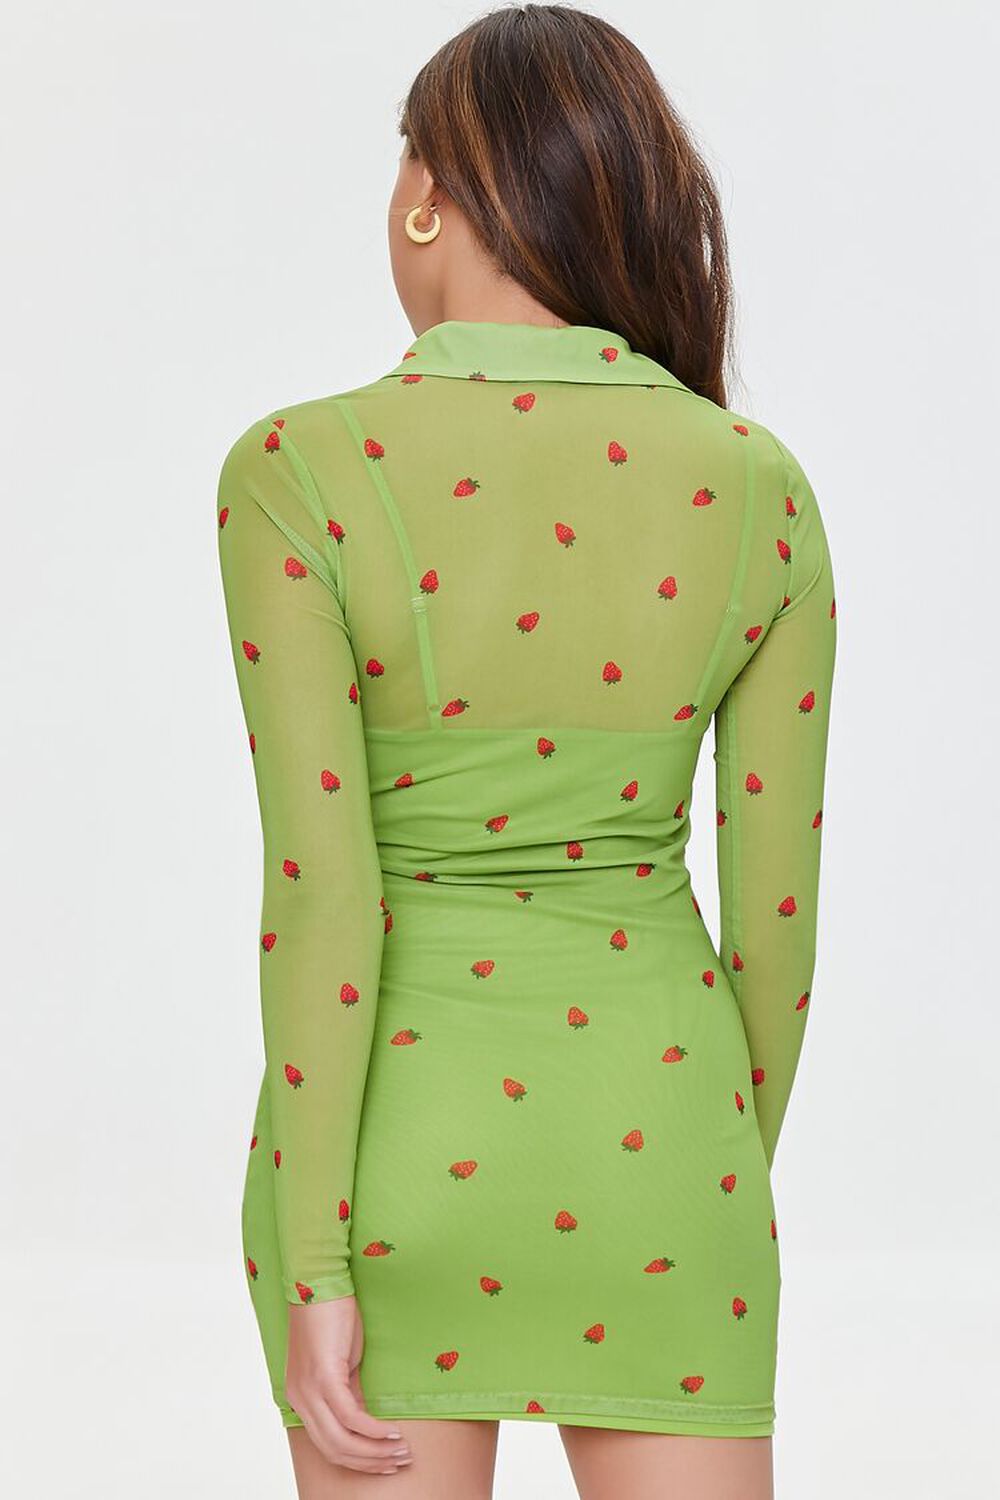 GREEN/MULTI Mesh Strawberry Print Mini Dress, image 3